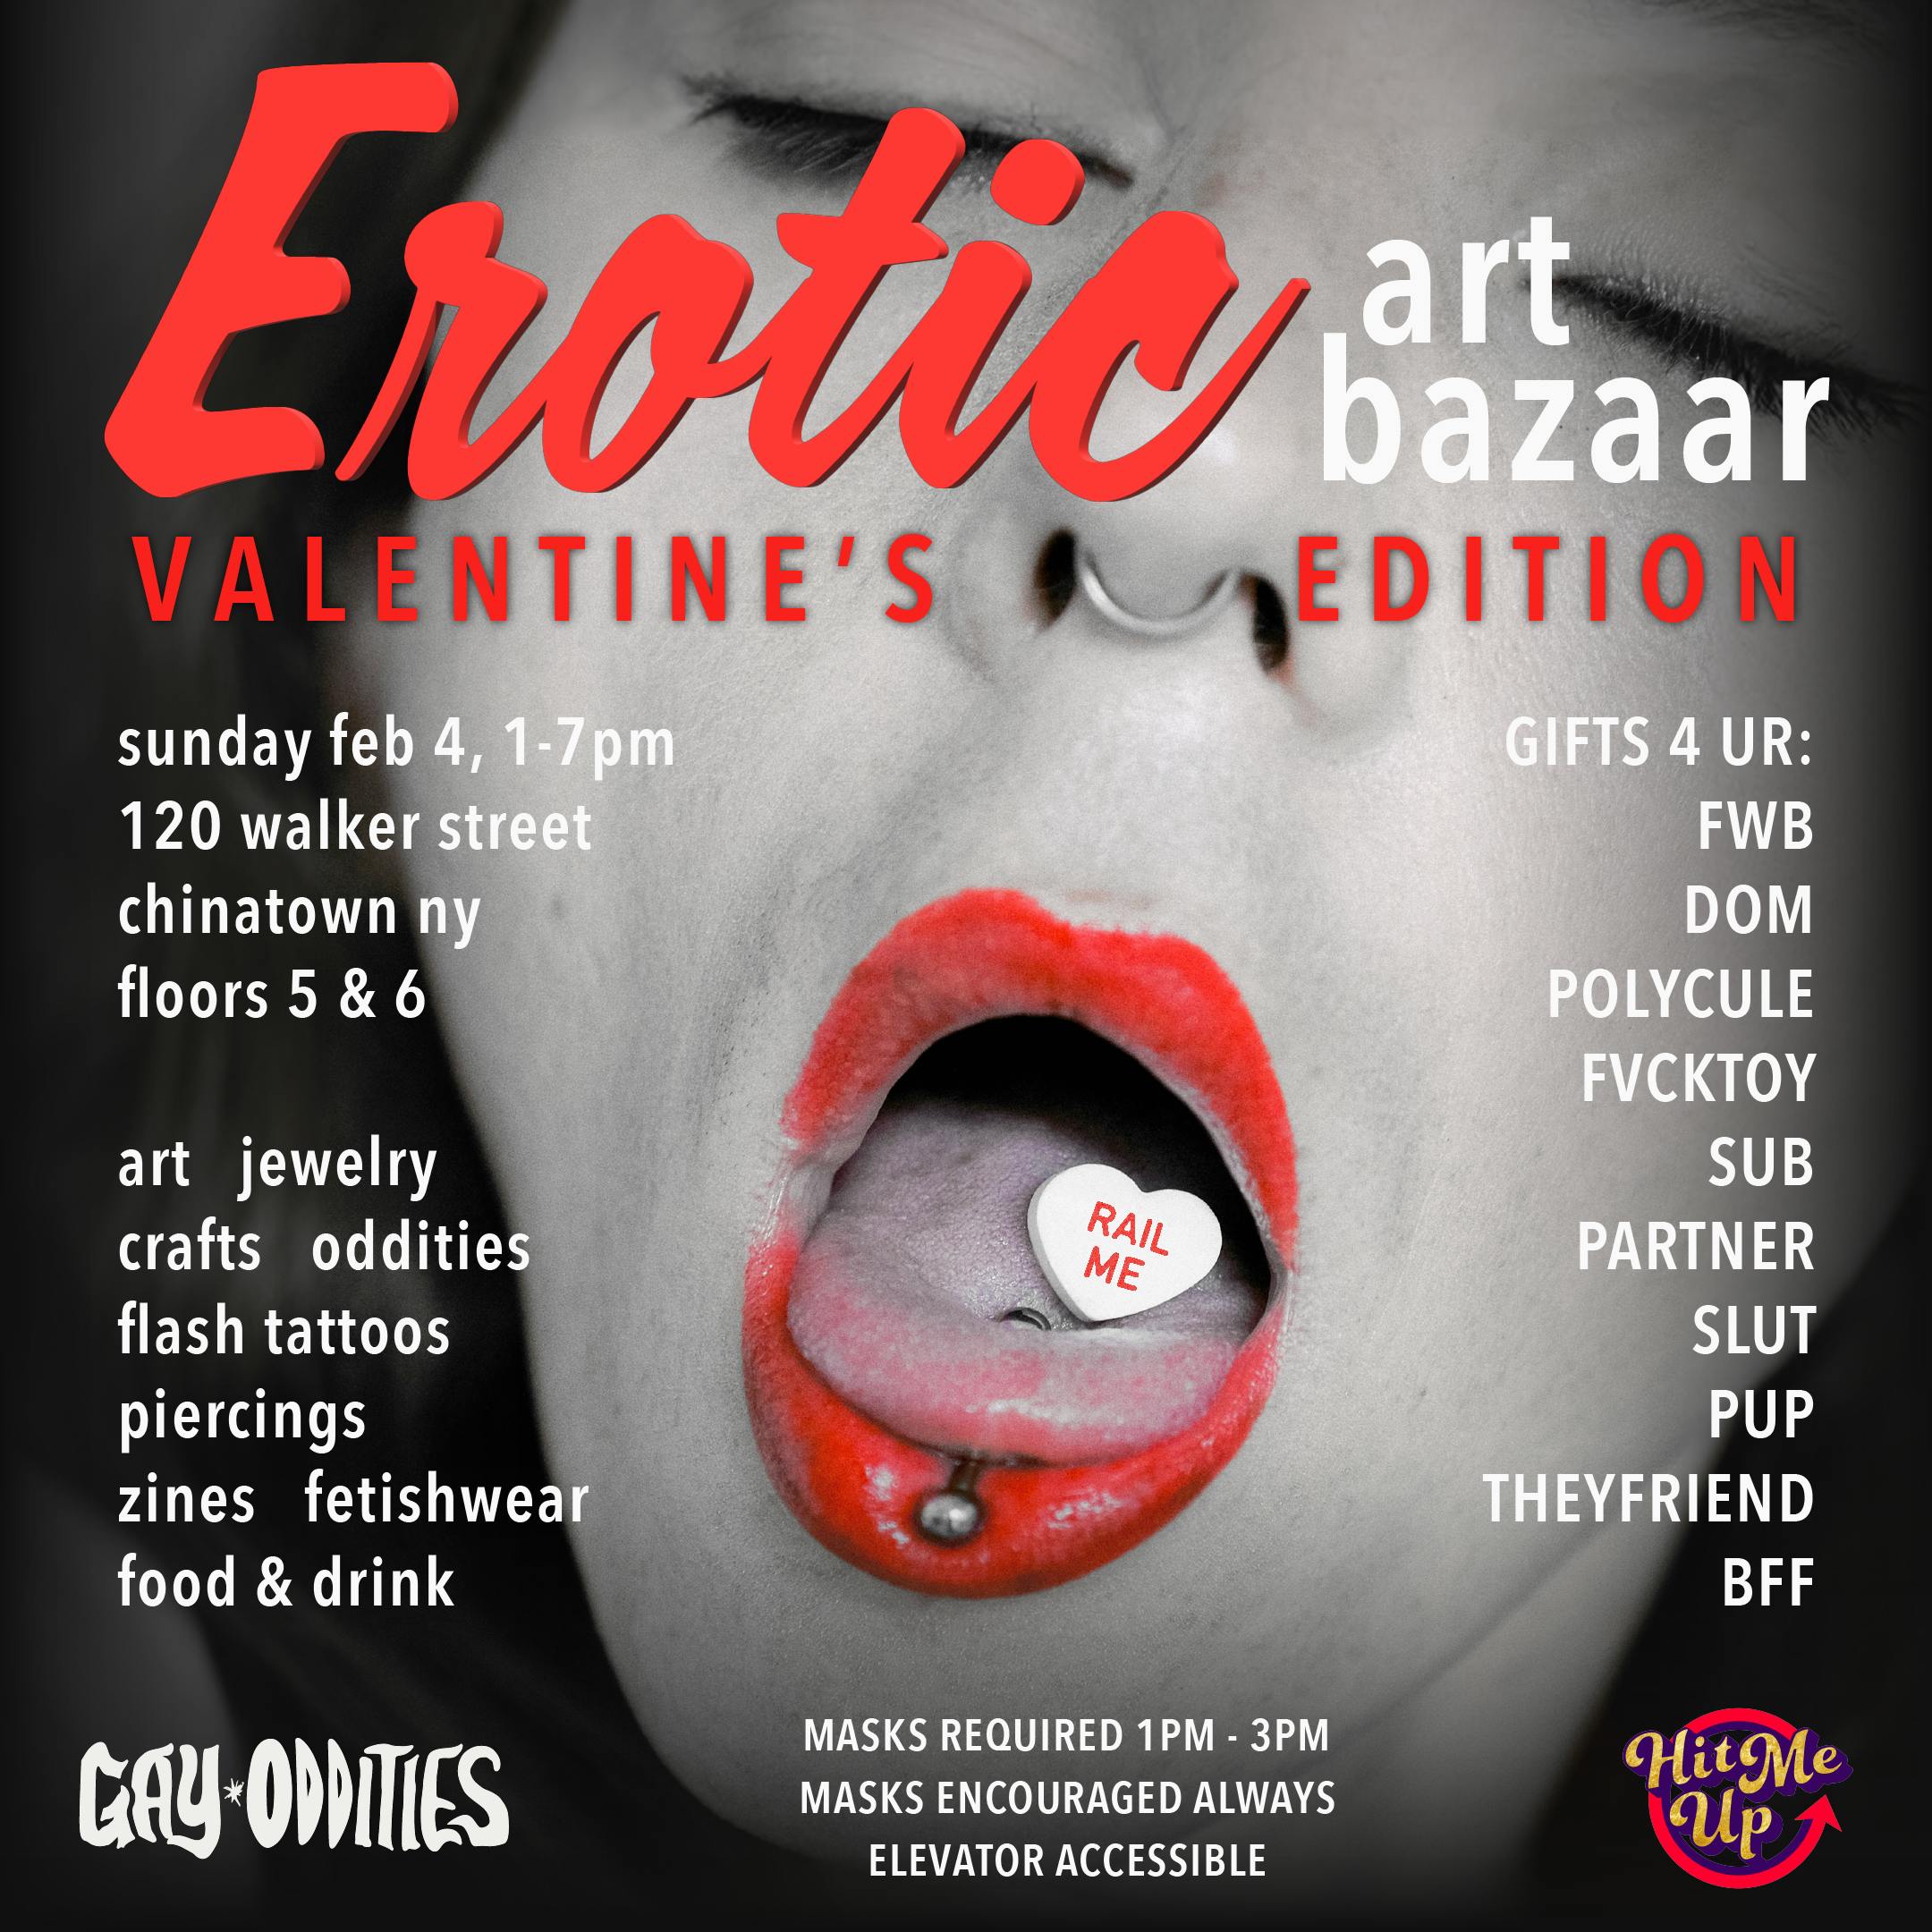 gay oddities erotic art bazaar. sunday feb 4, 1-7pm, 120 walker street, nyc